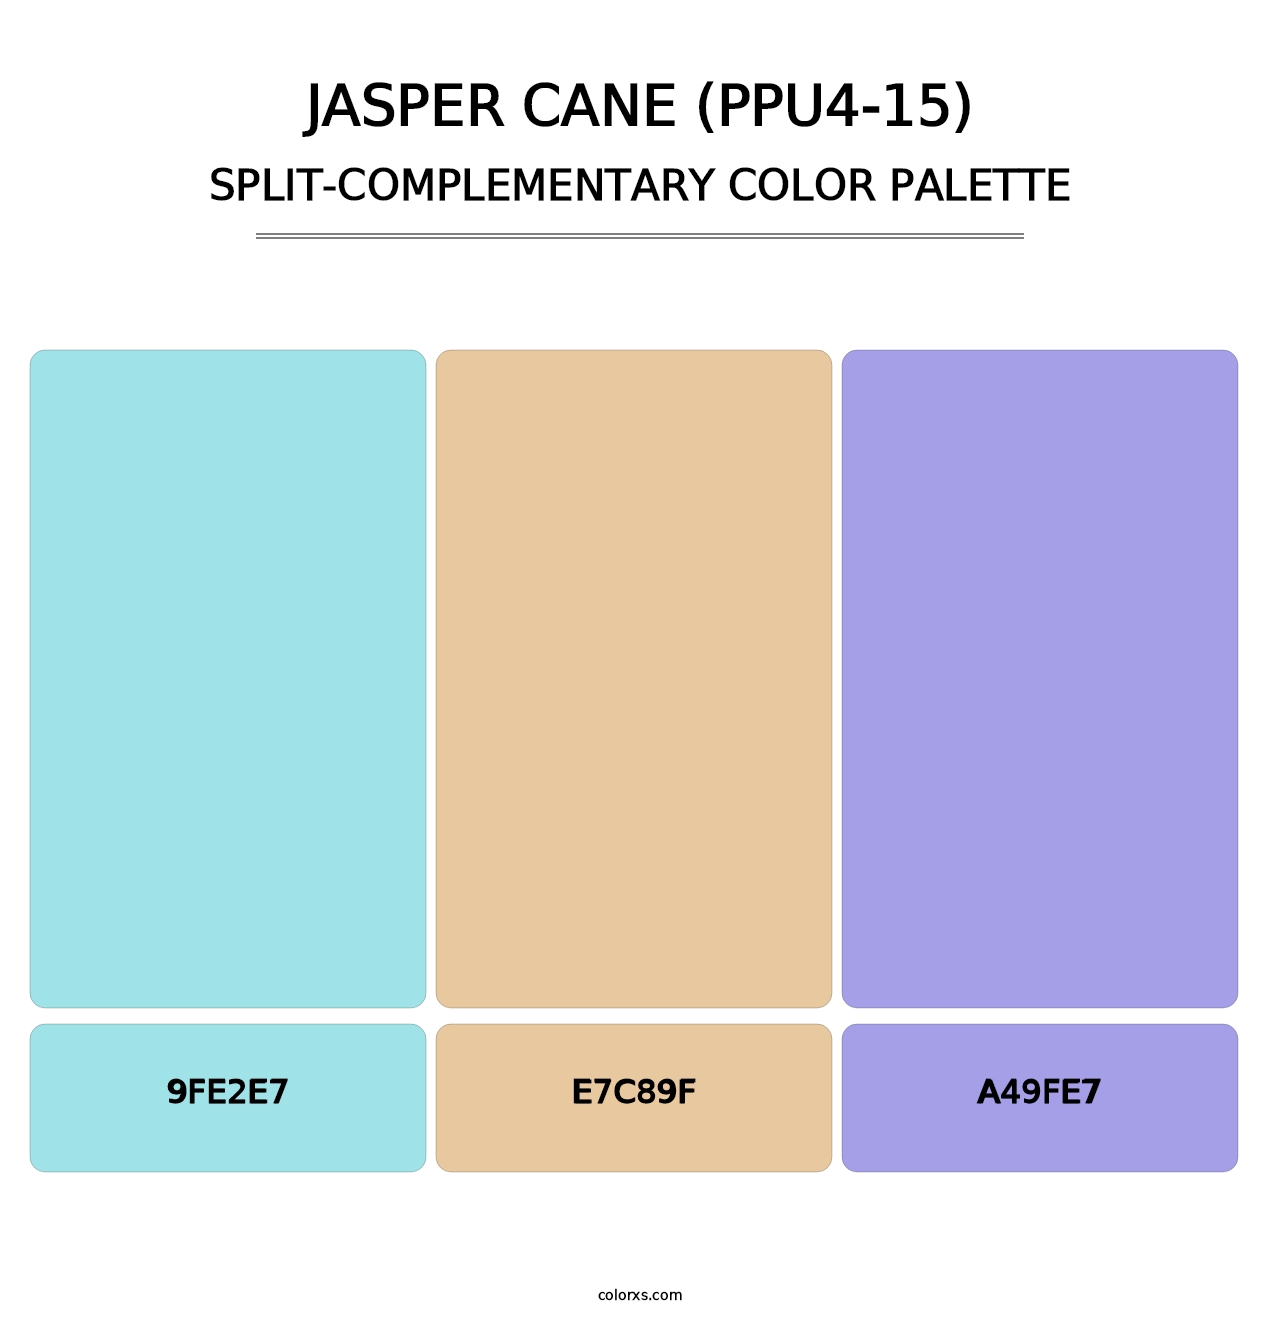 Jasper Cane (PPU4-15) - Split-Complementary Color Palette